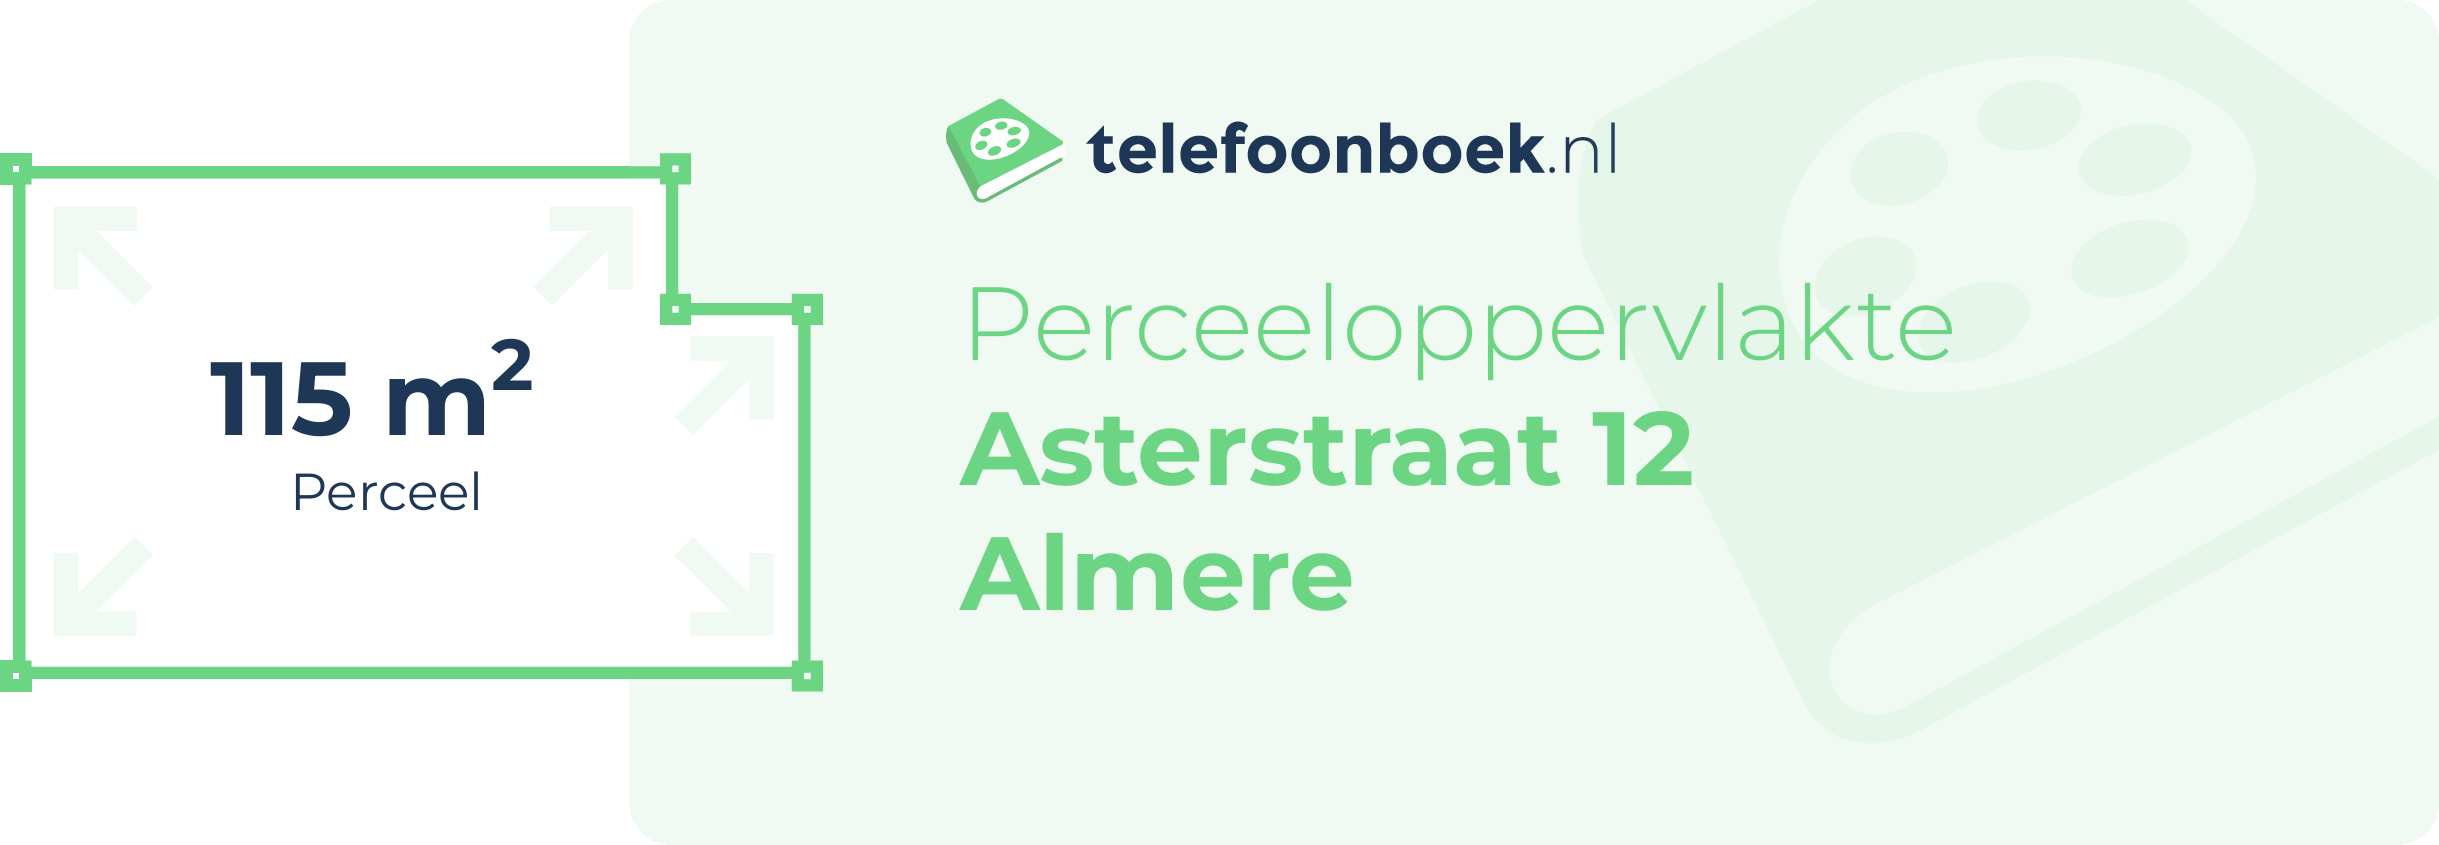 Perceeloppervlakte Asterstraat 12 Almere